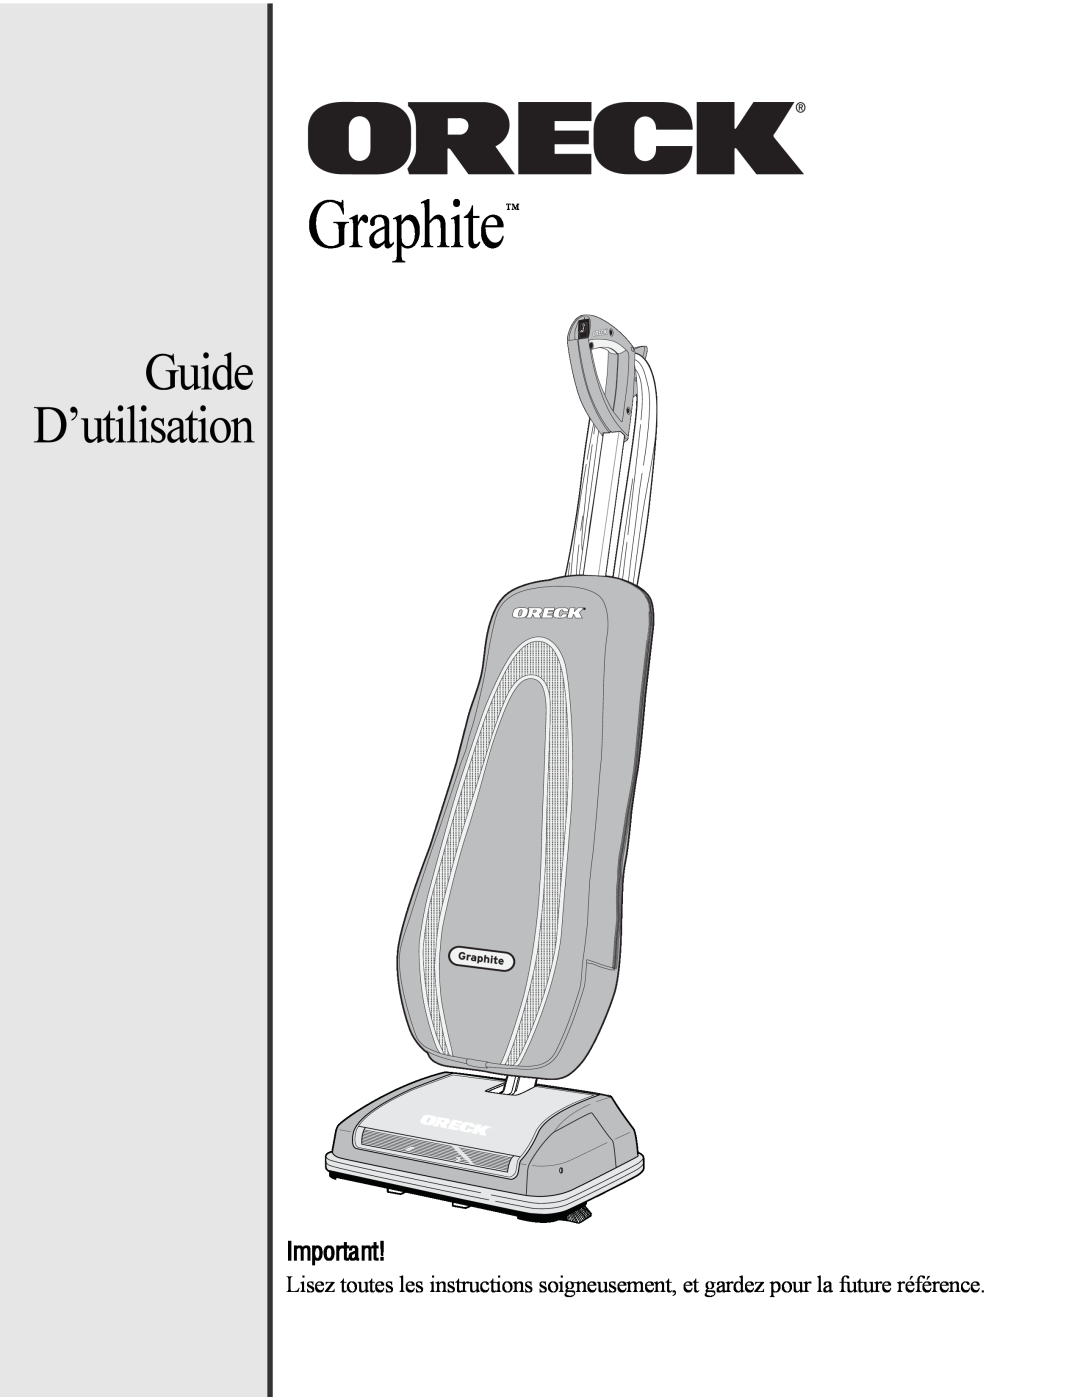 Oreck U4300 manual Guide D’utilisation, Graphite 